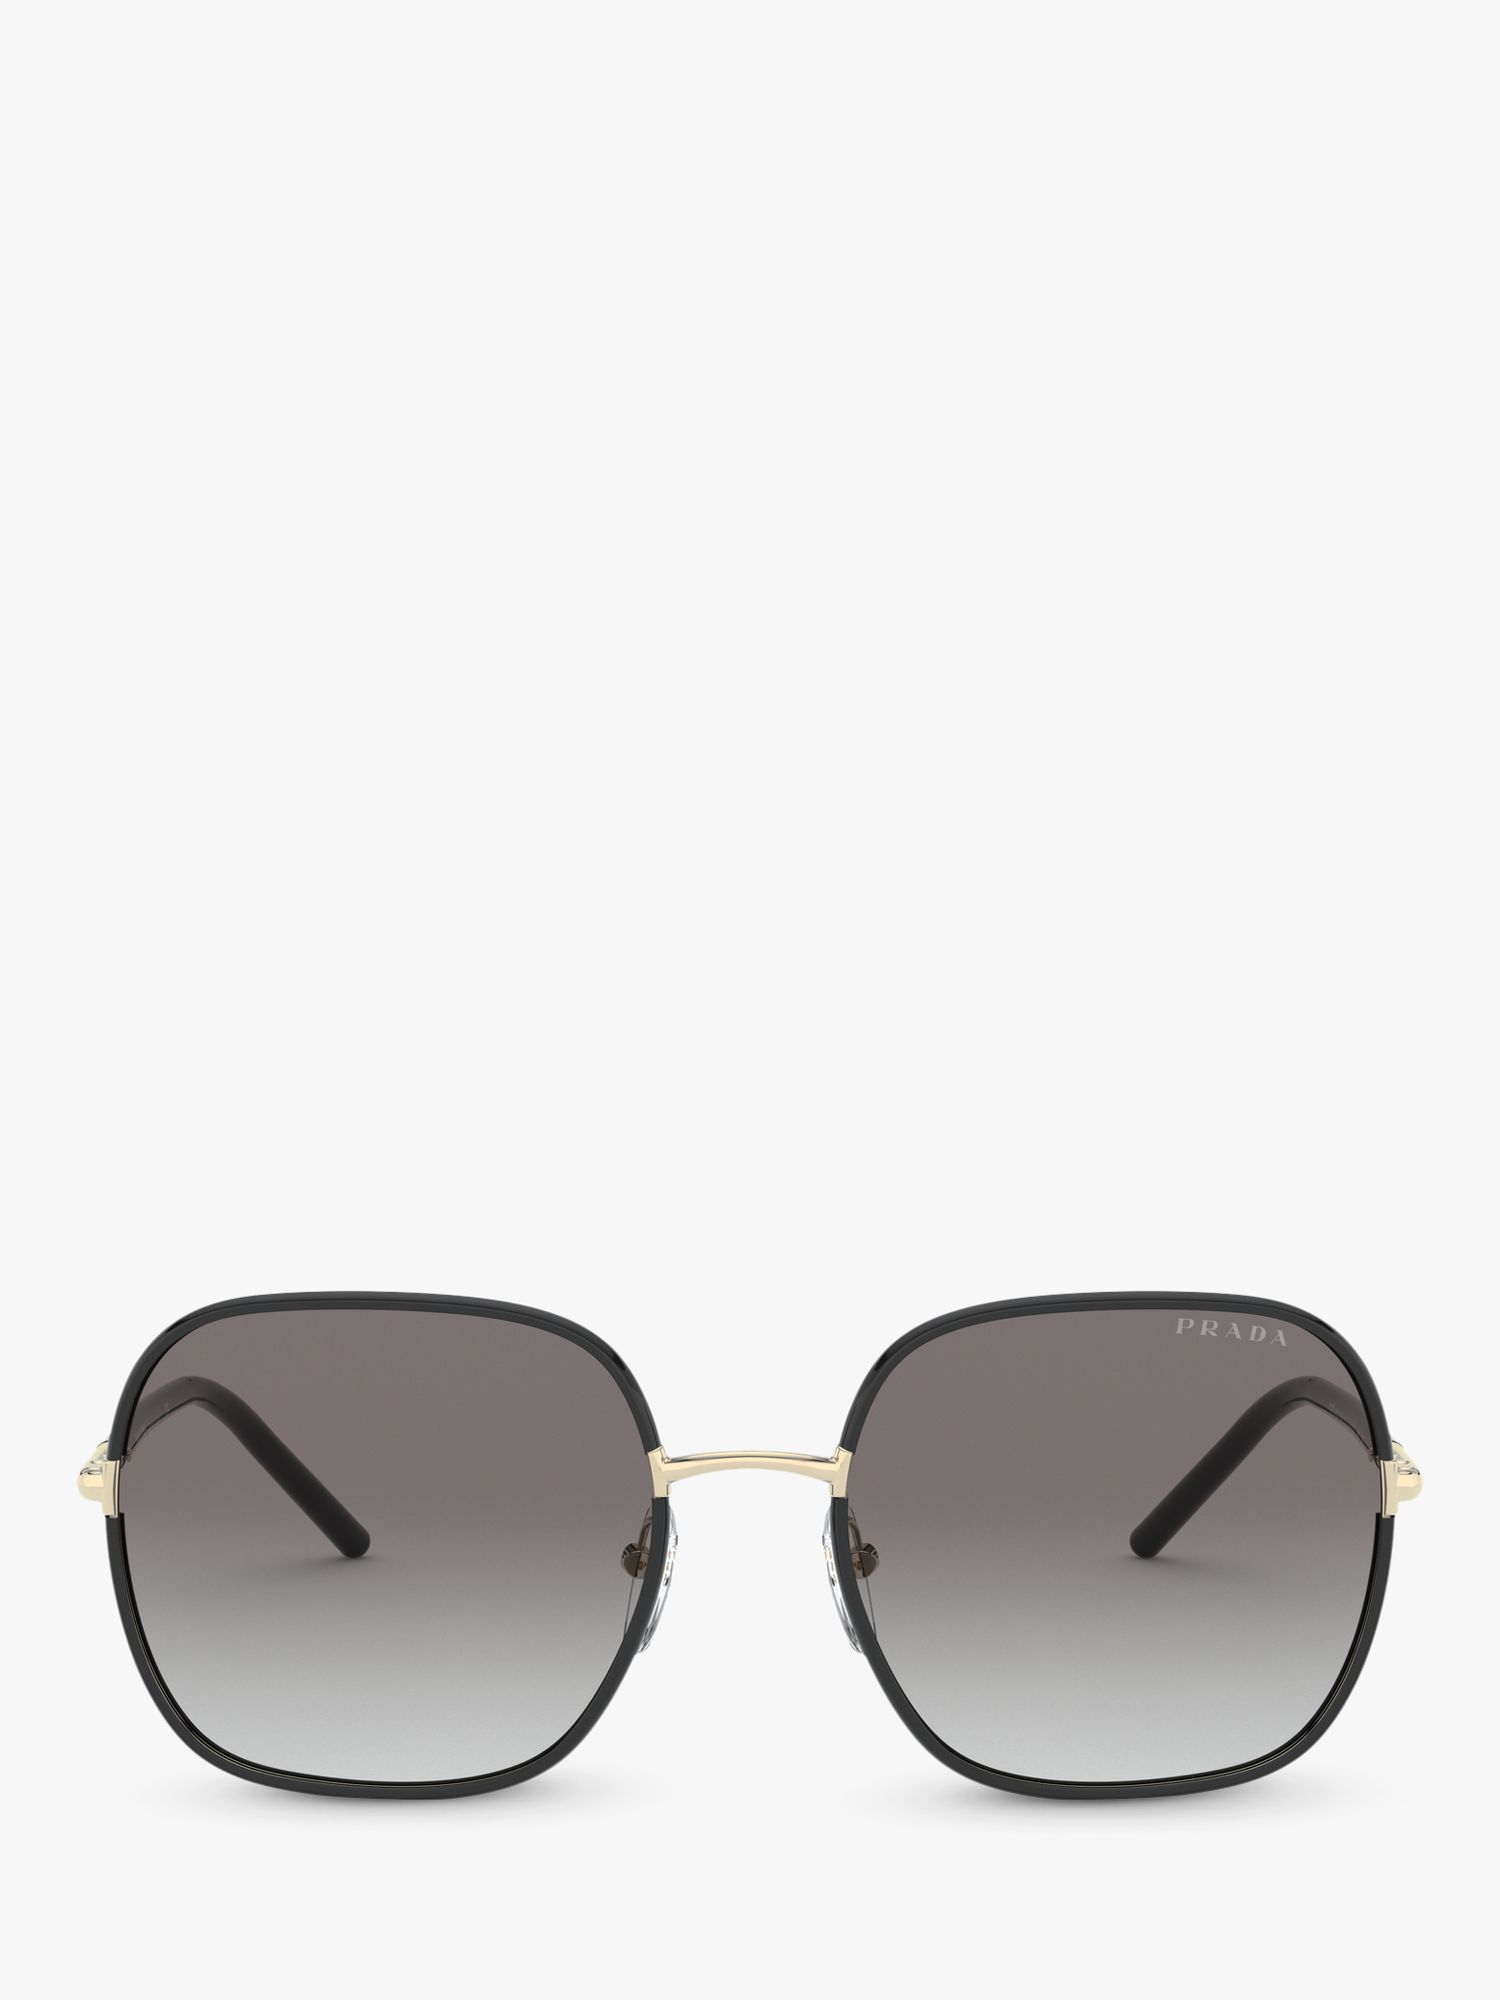 Prada PR 67XS Women's Square Sunglasses, Pale Gold/Black/Grey Gradient at  John Lewis & Partners